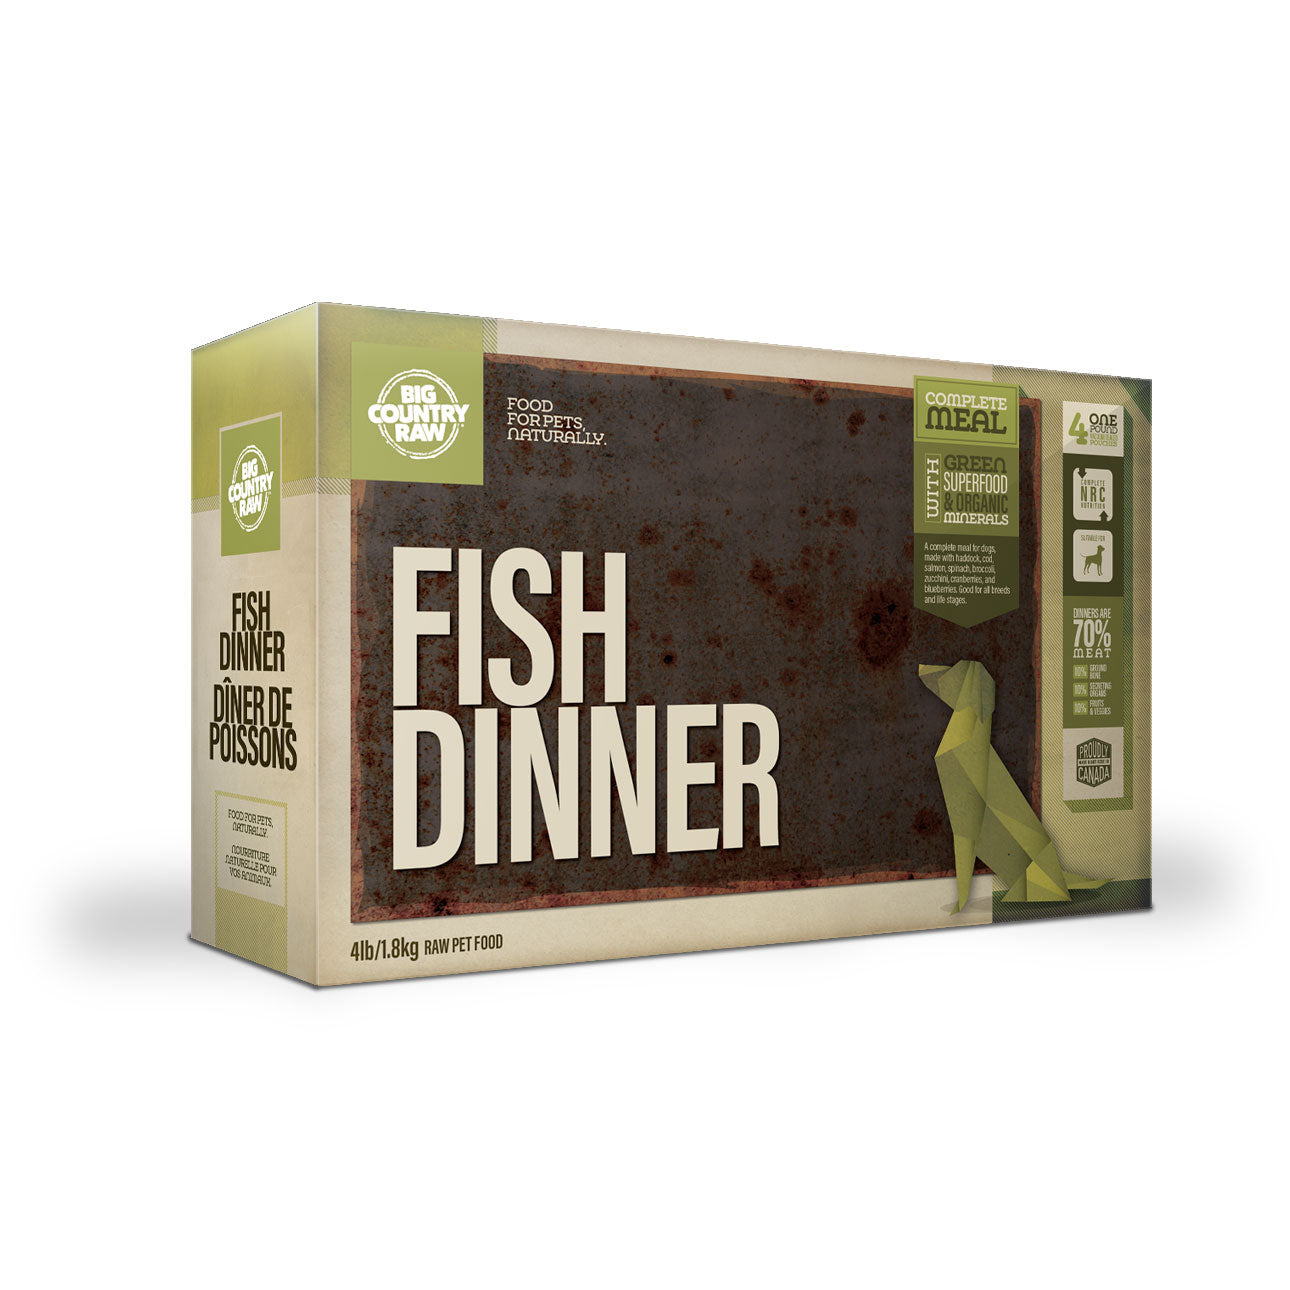 BIG COUNTRY RAW DINNER CARTON - FISH